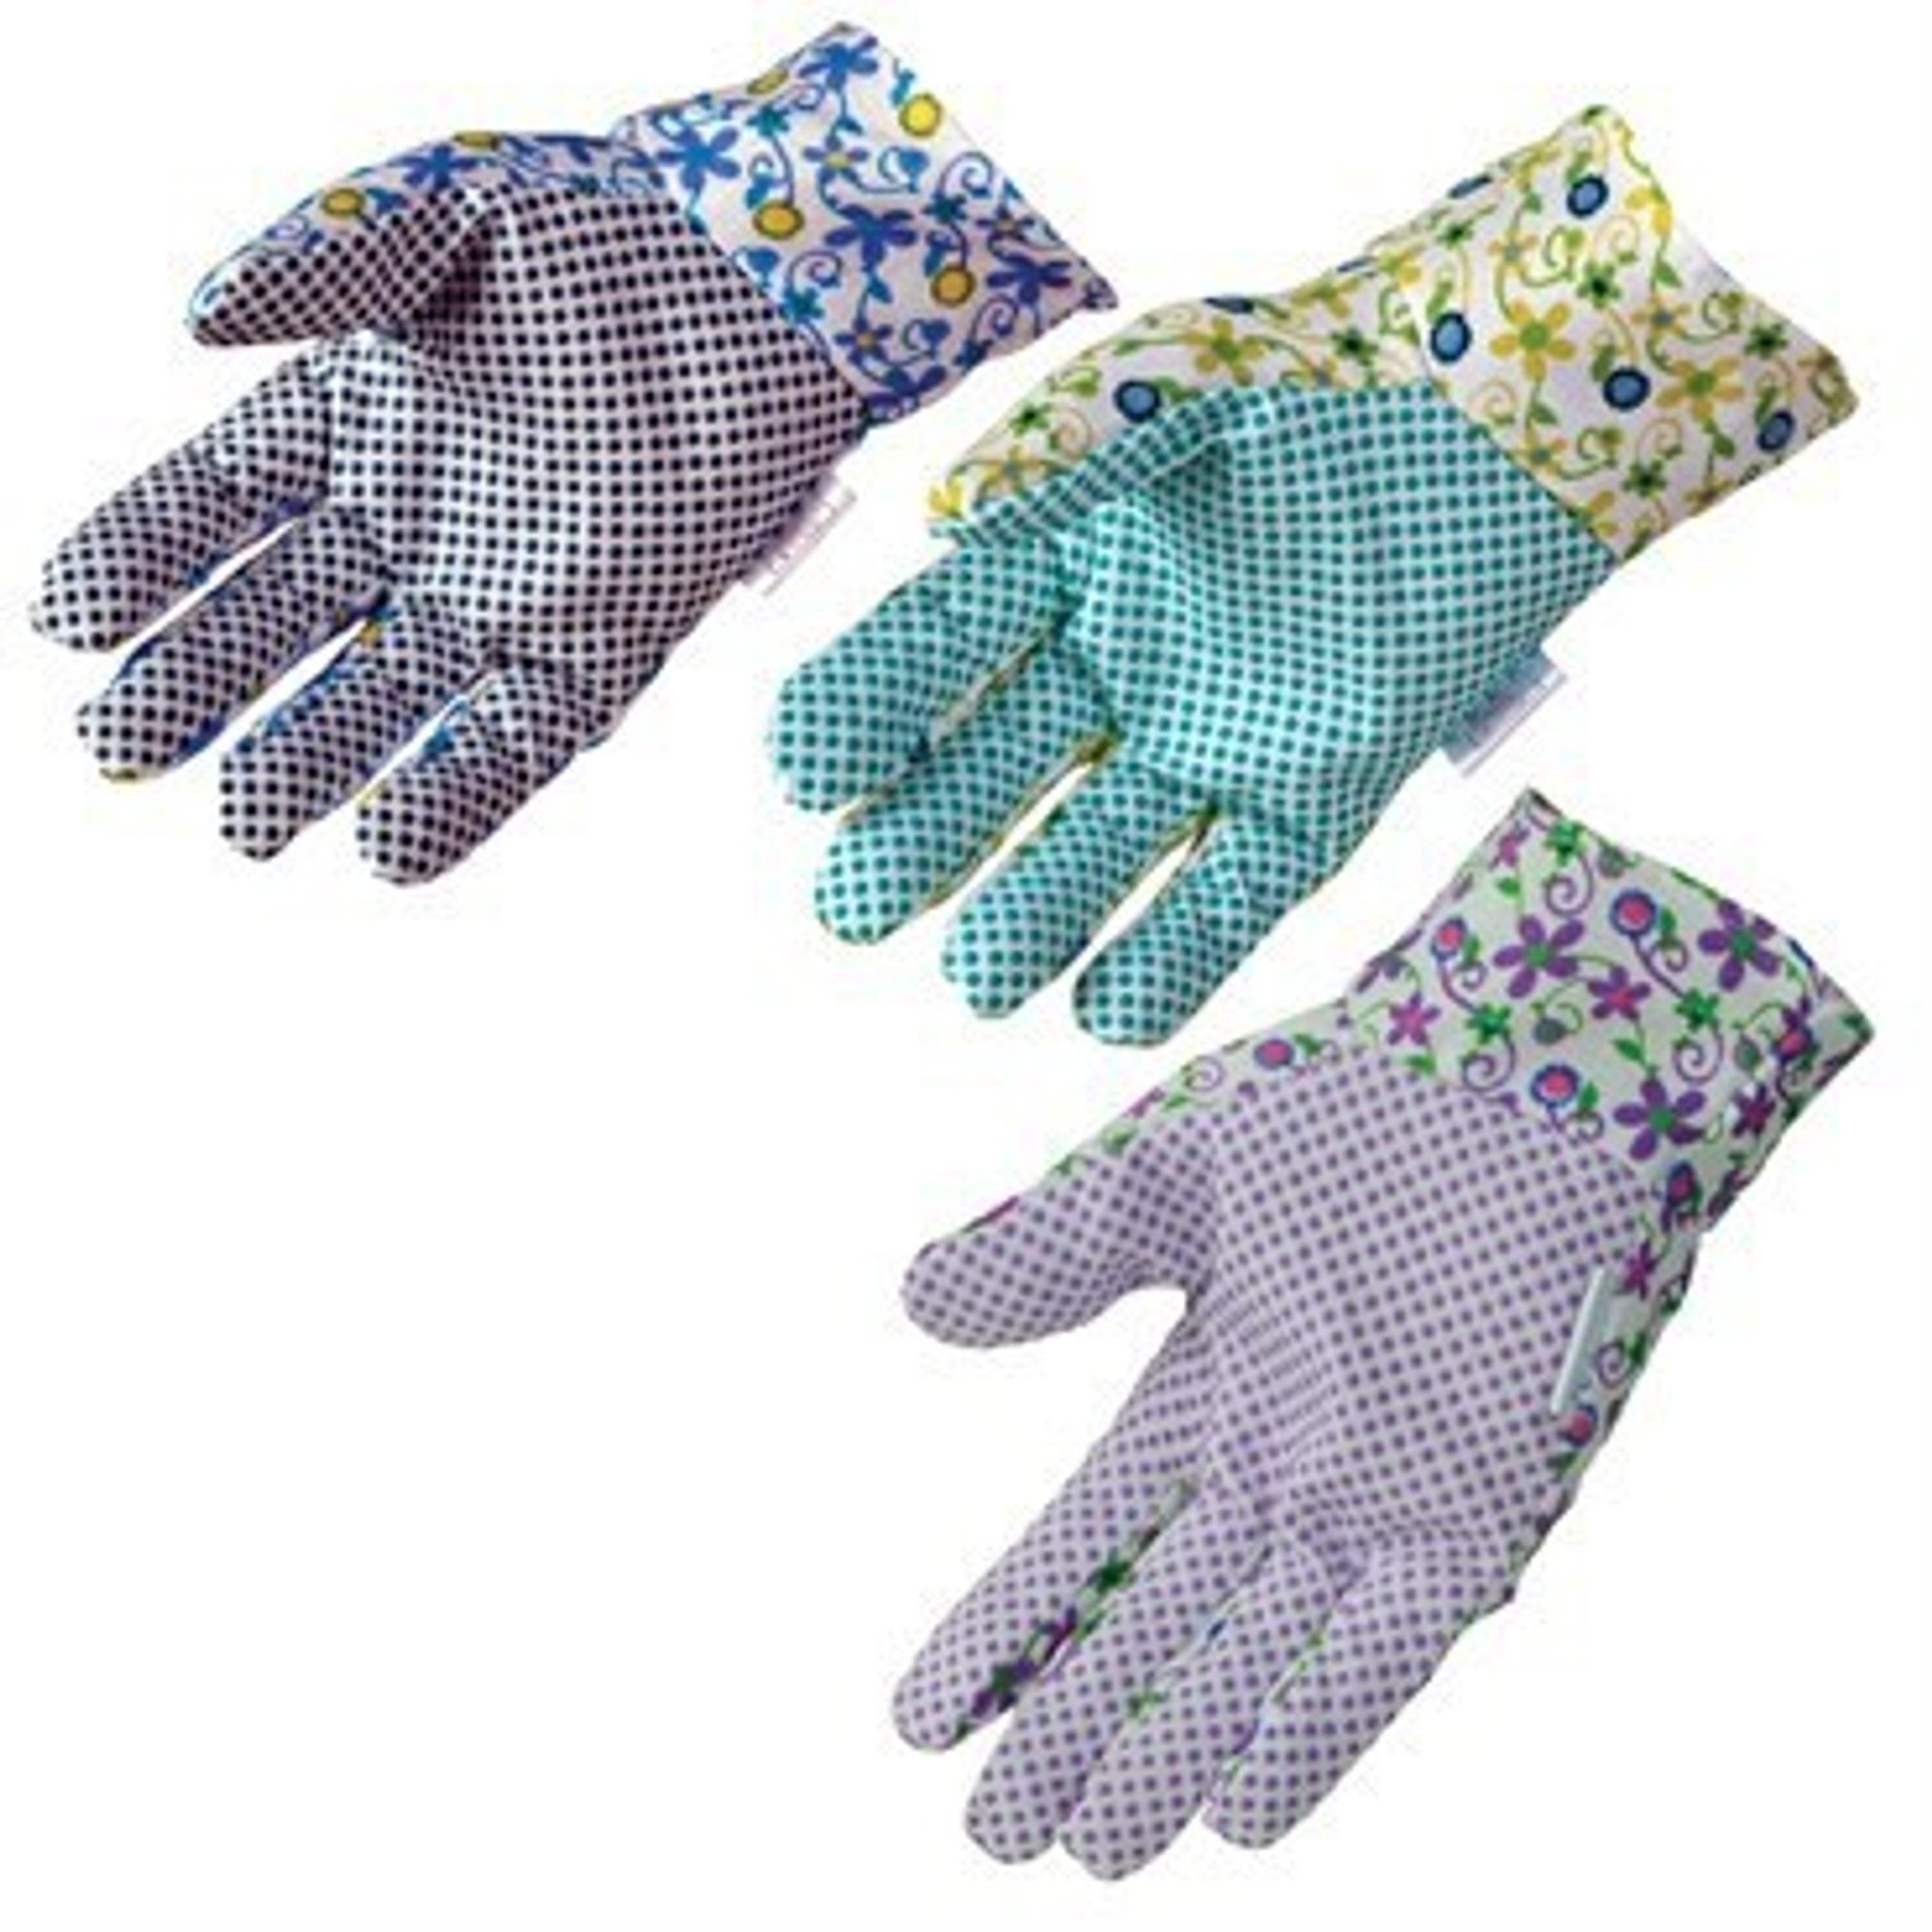 Bond Bloom All Purpose Gardening Gloves Assorted Colors Urban